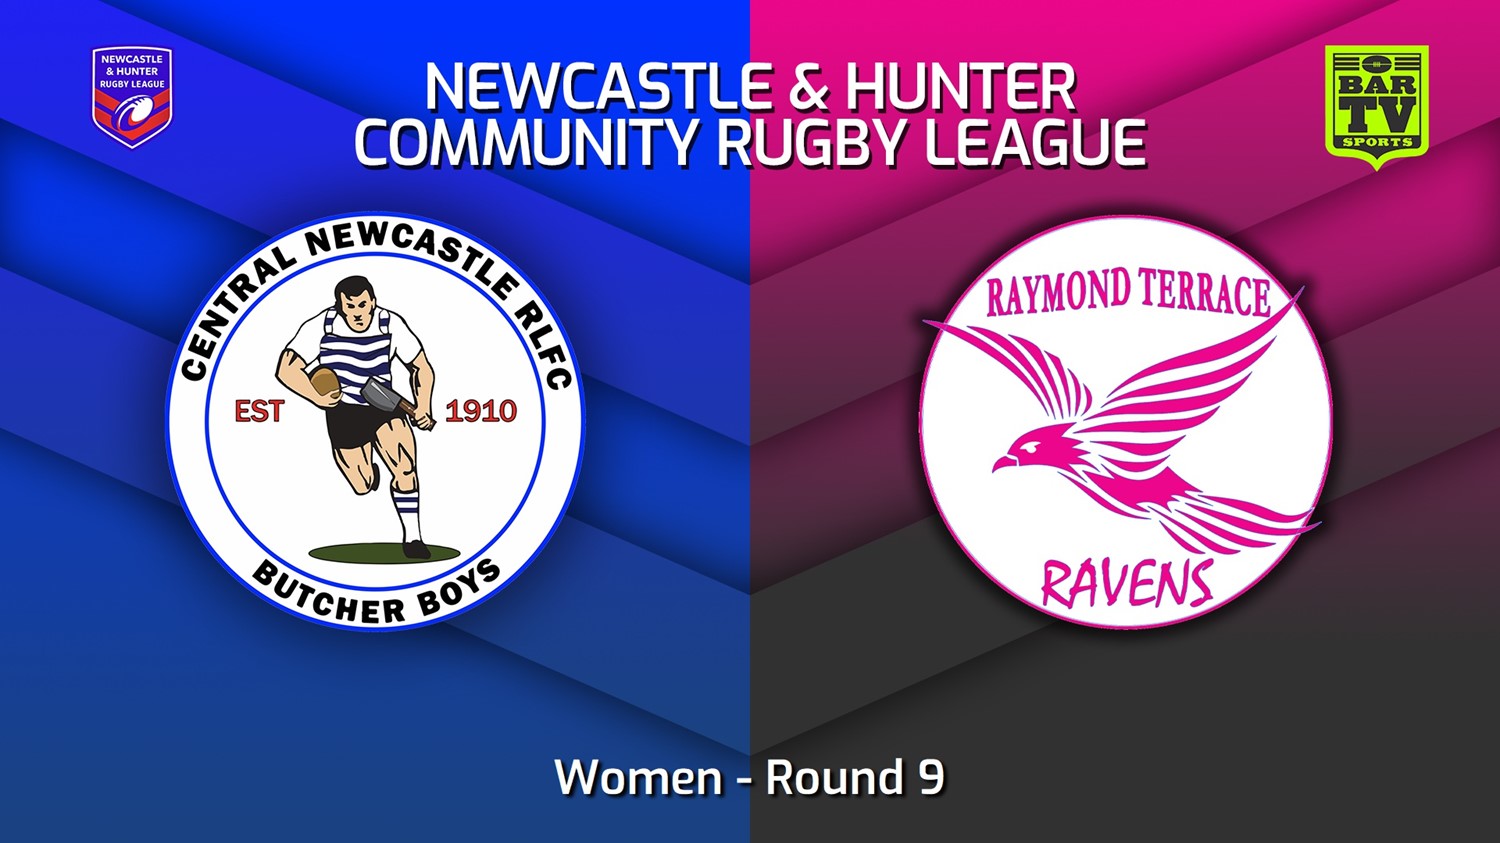 230528-NHRL Round 9 - Women - Central Newcastle Butcher Boys v Raymond Terrace Slate Image